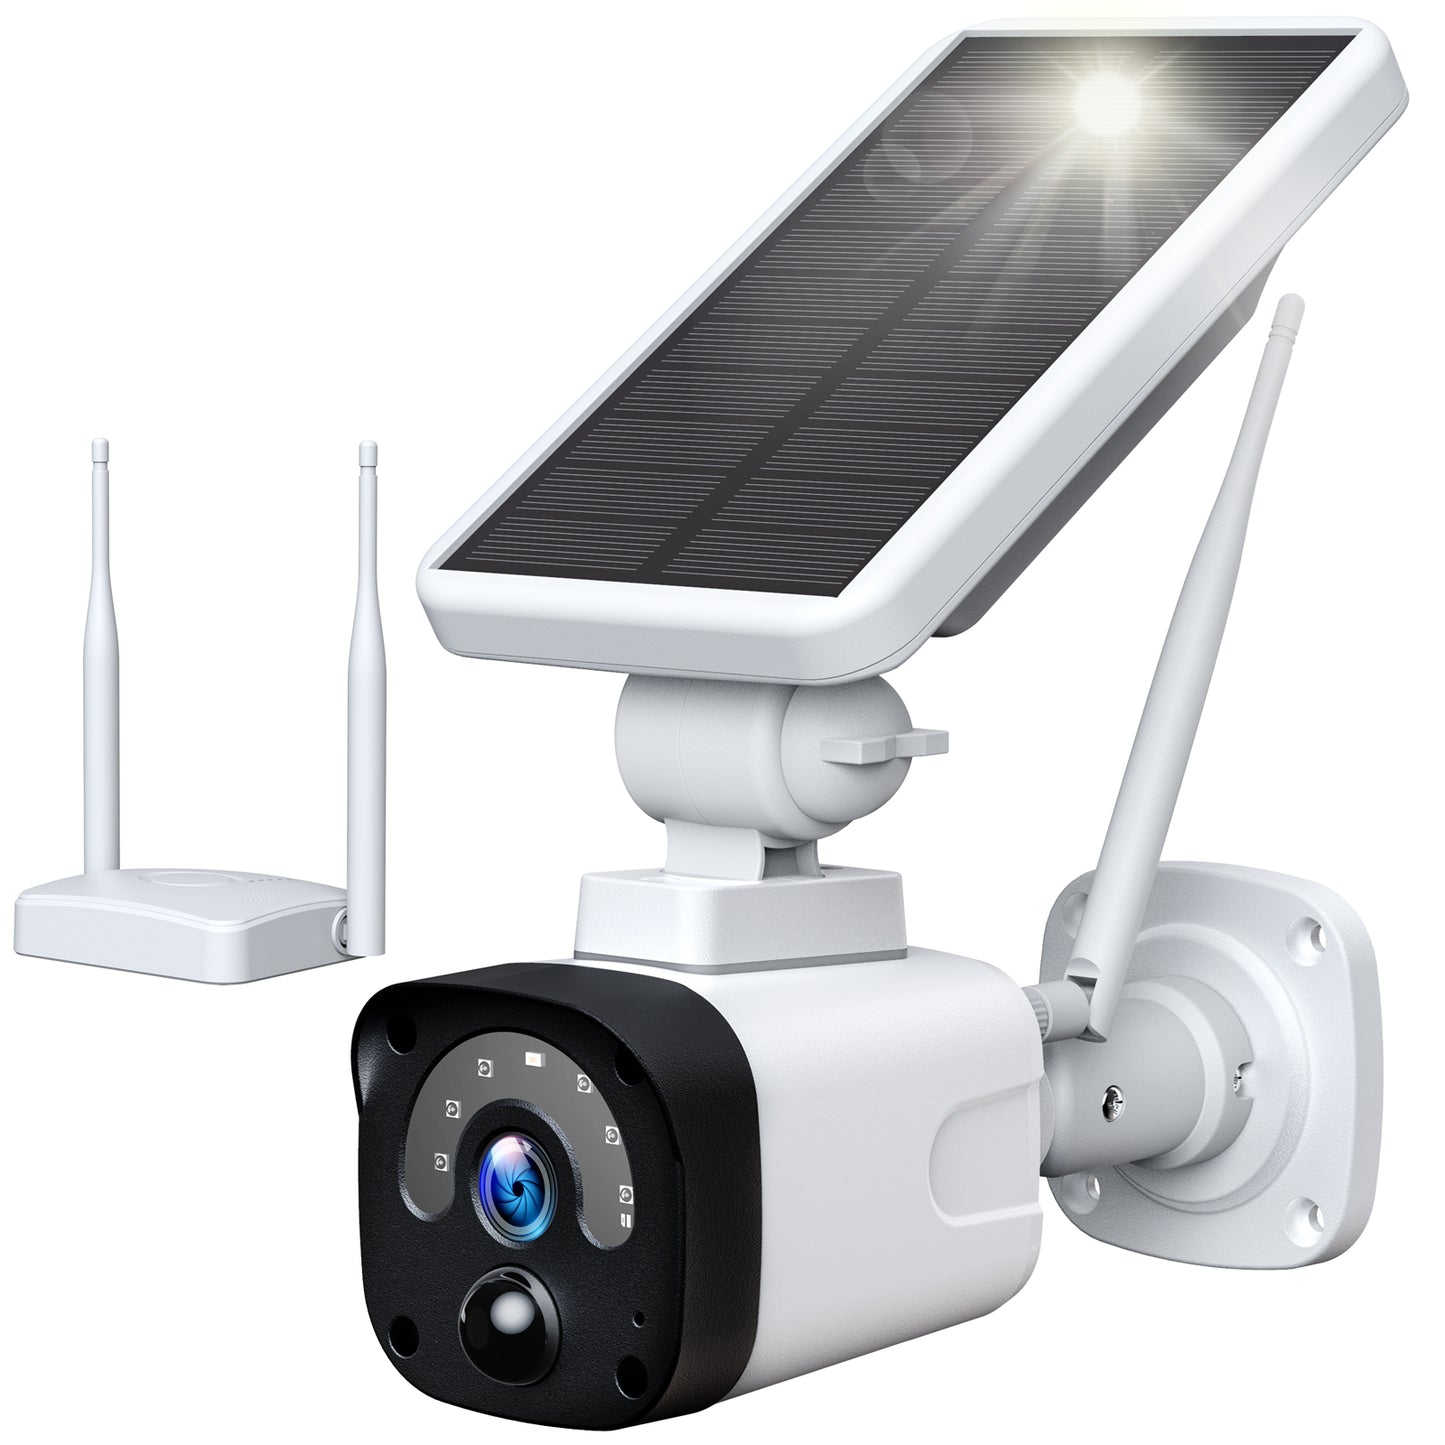 TOGUARD Solar Security Cameras Wireless Outdoor 1080P Home WIFI Security Cameras 2-Way Audio